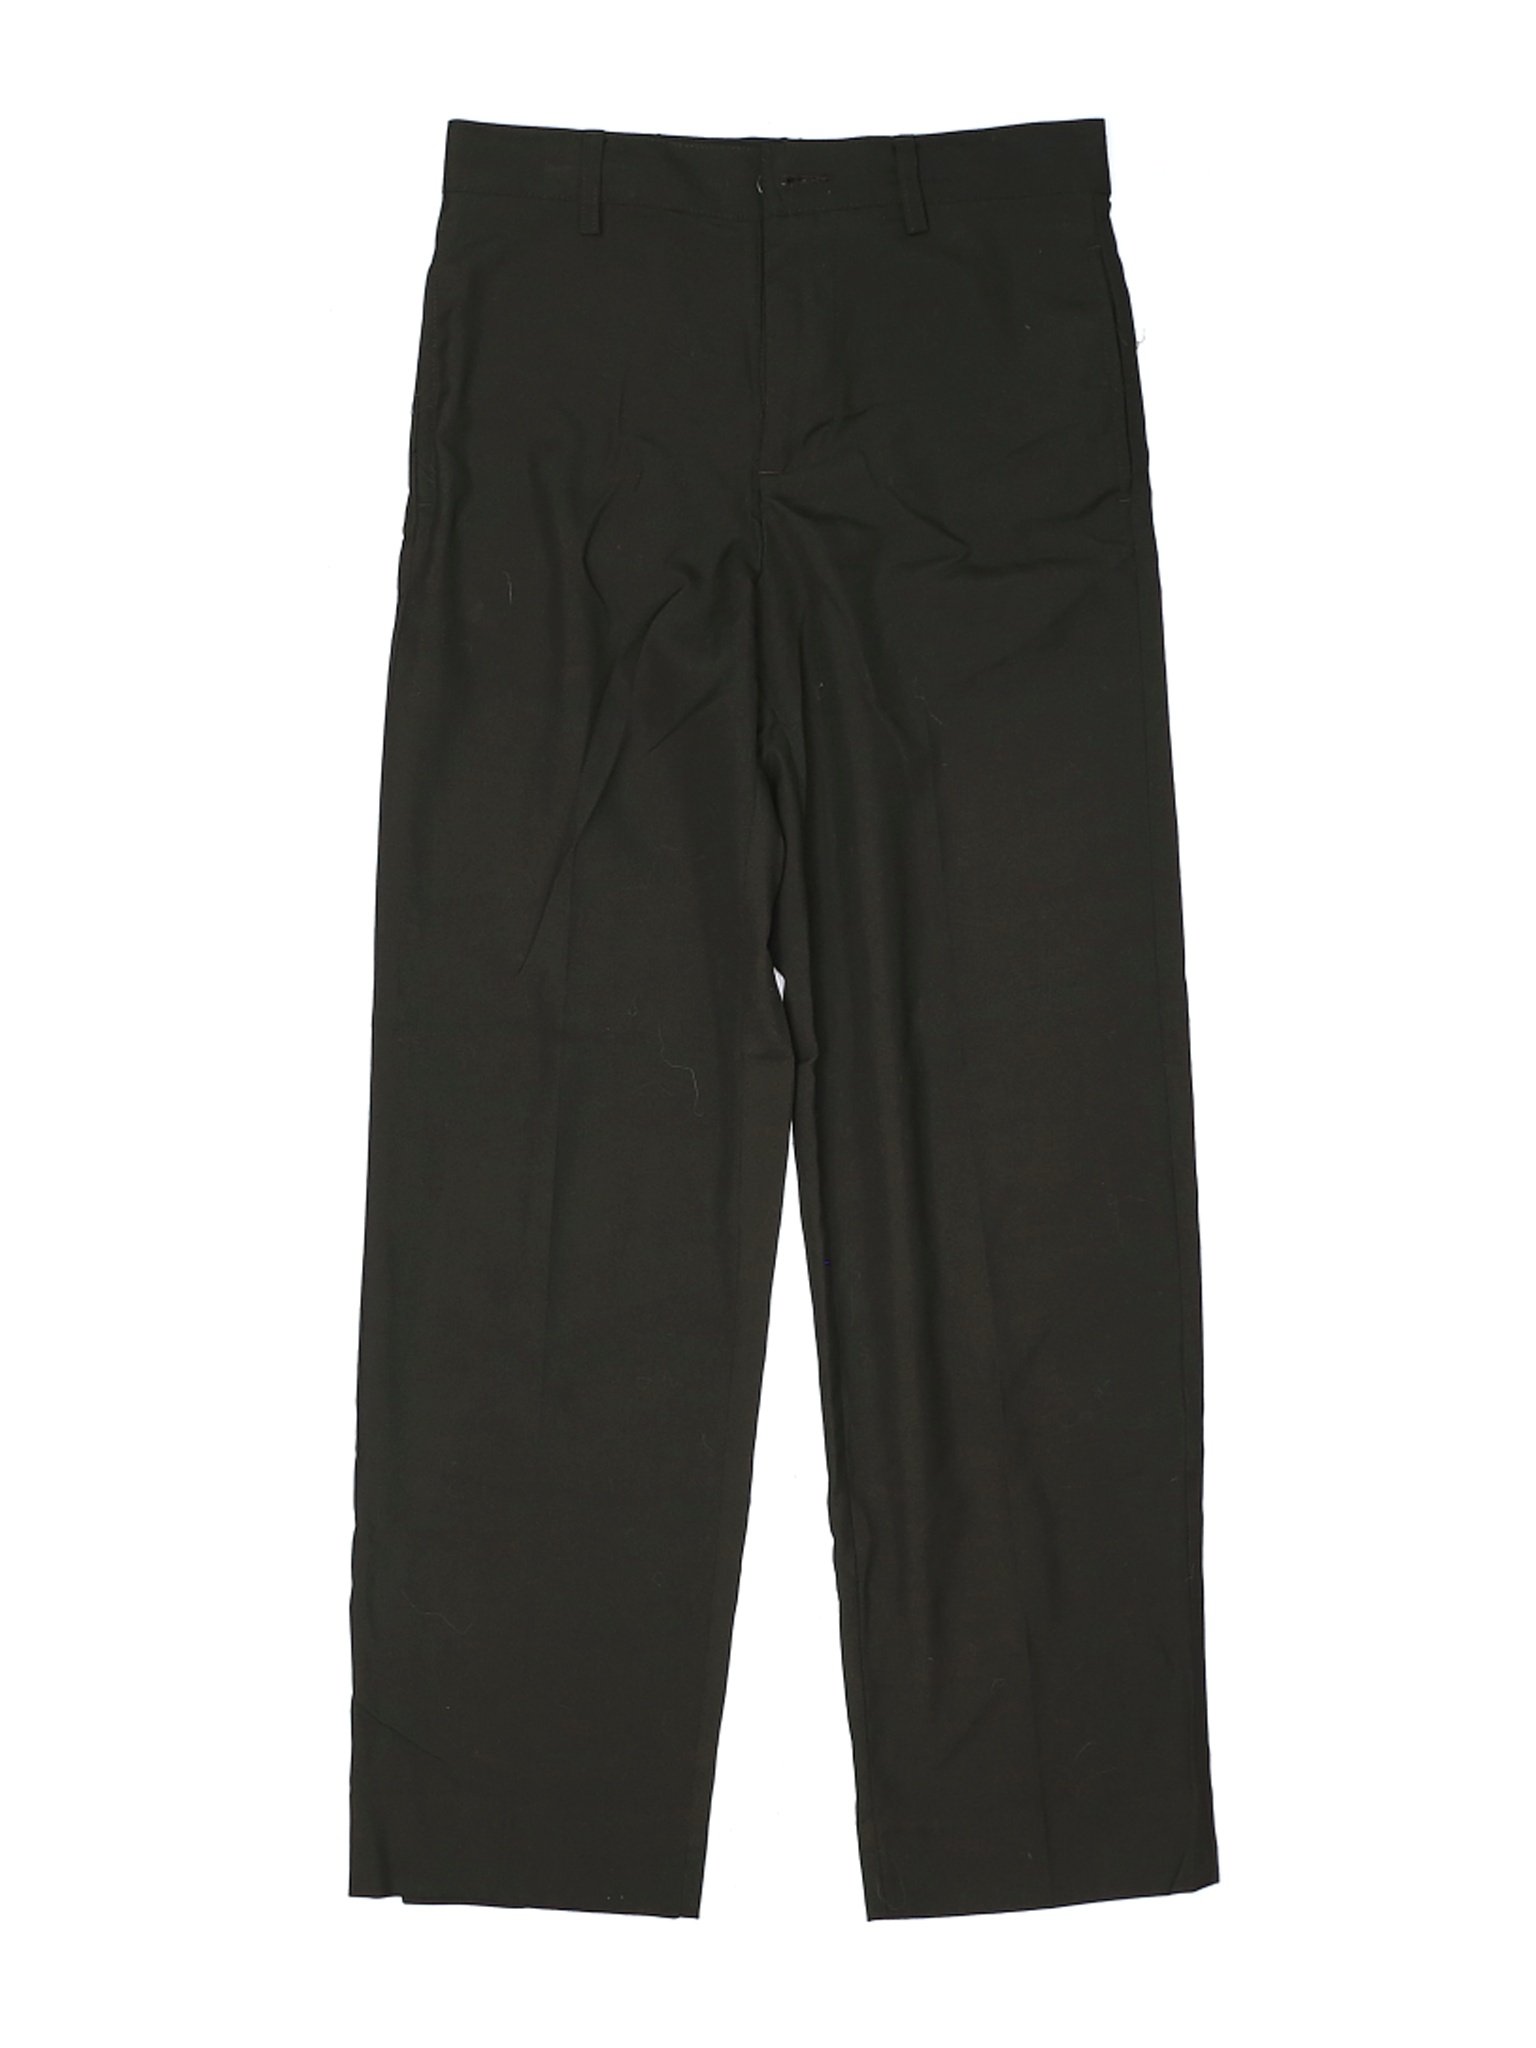 Cat & Jack Boys Black Dress Pants 12 | eBay